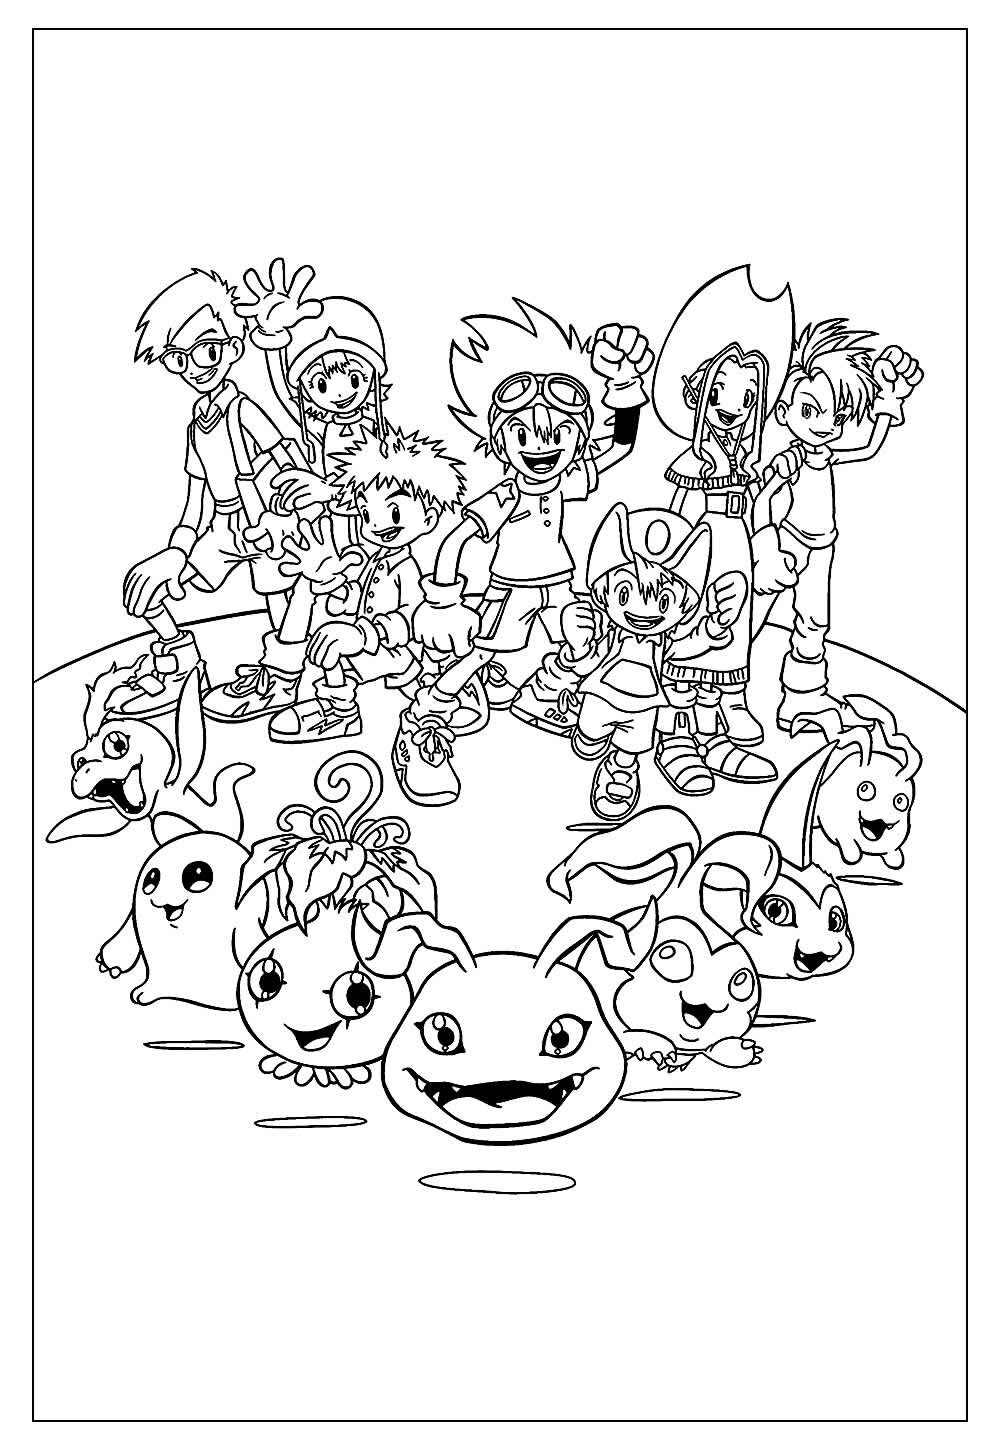 Desenho de Digimon para pintar